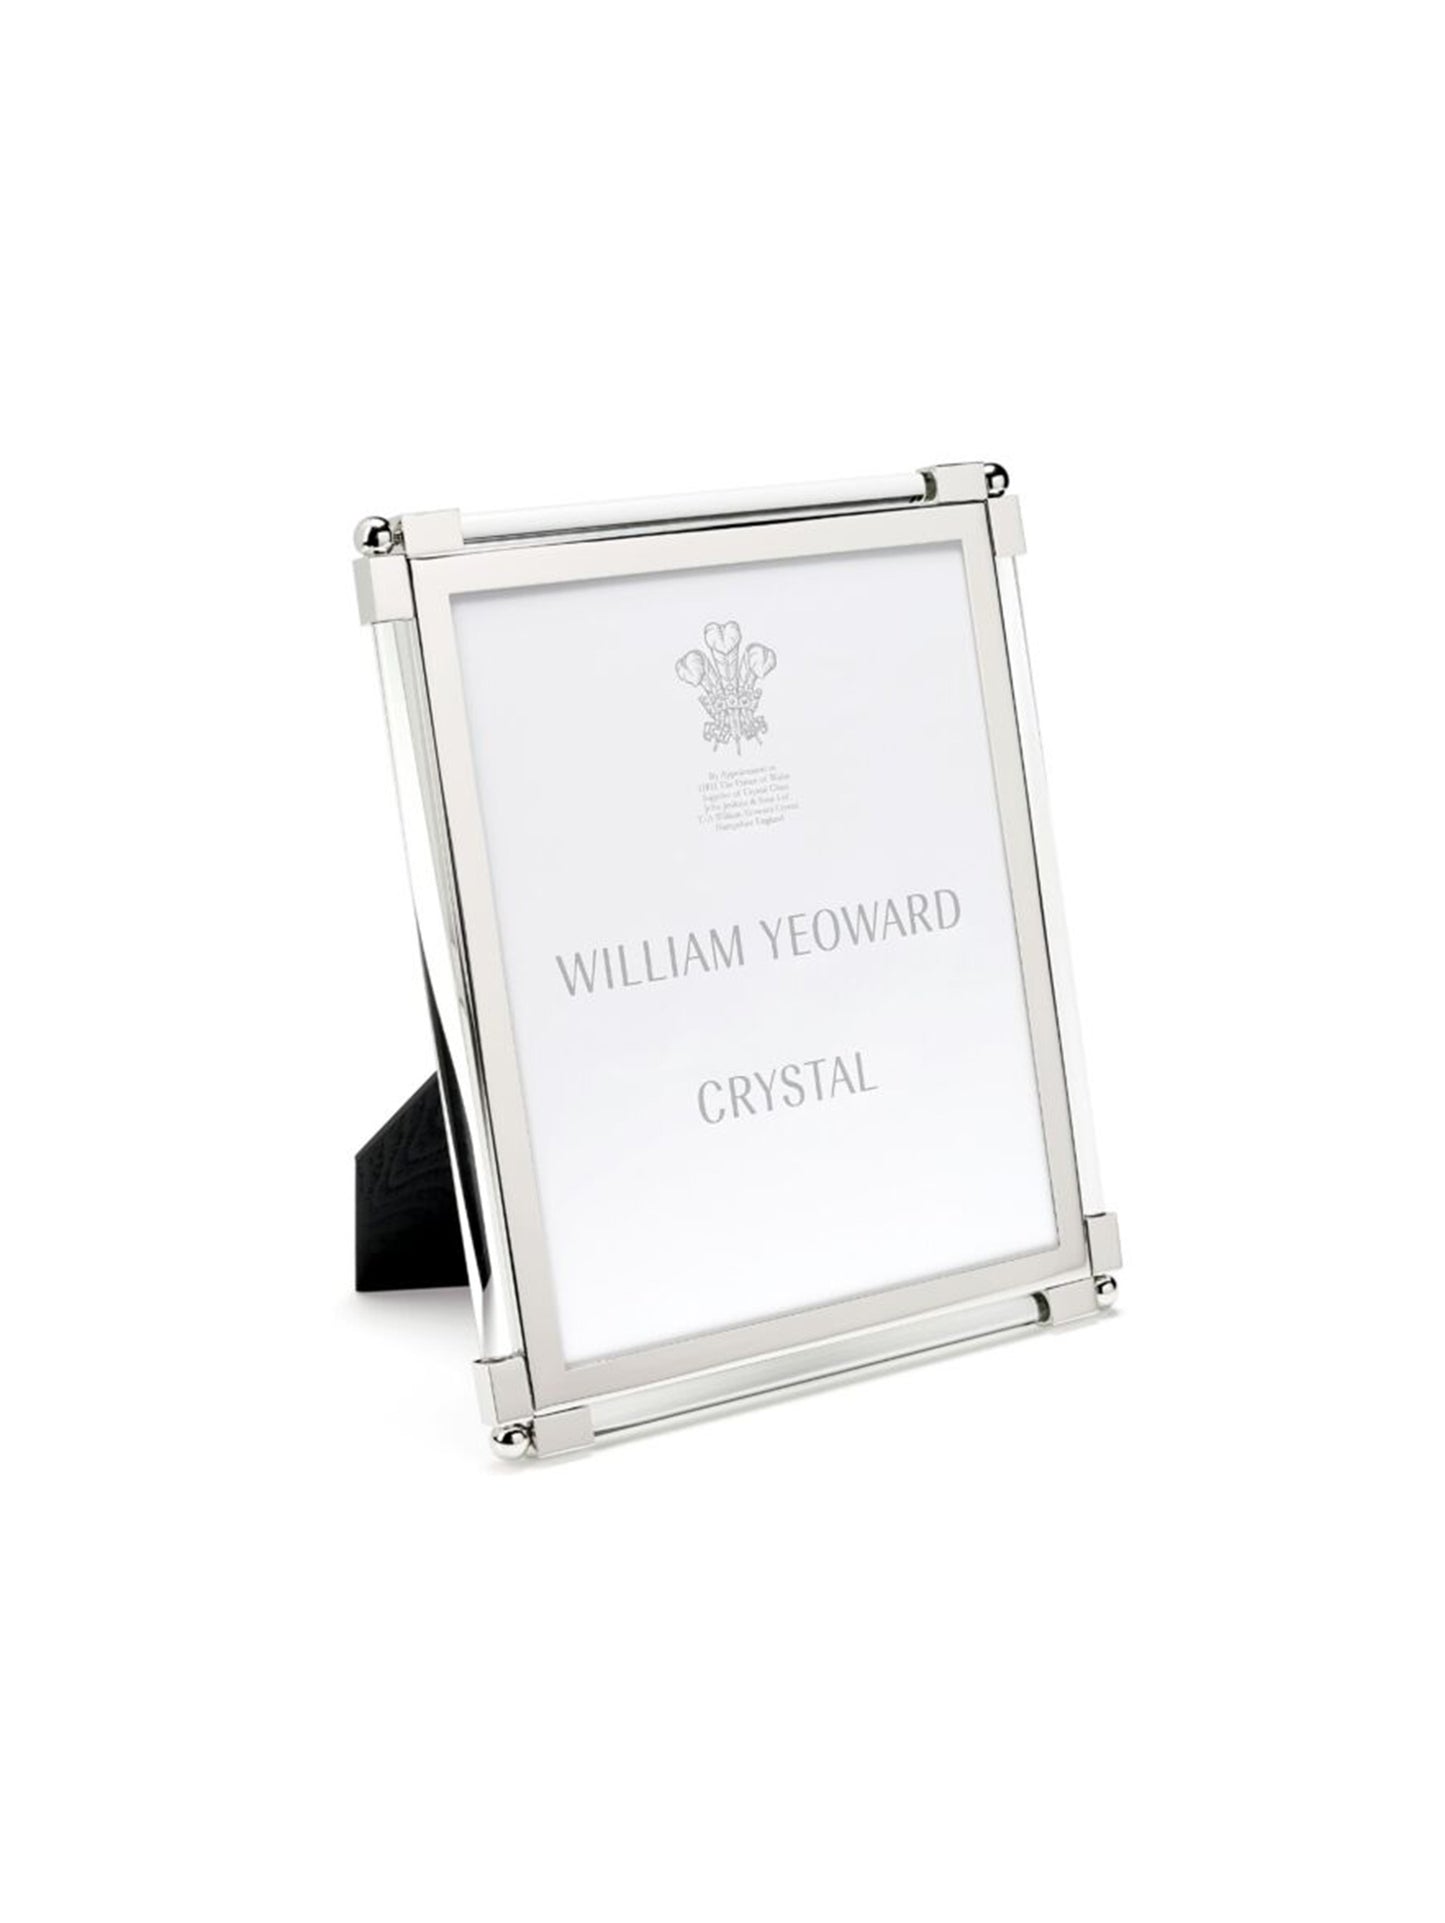 William Yeoward Crystal Classic Clear Photo Frame 8 x 10 Weston Table